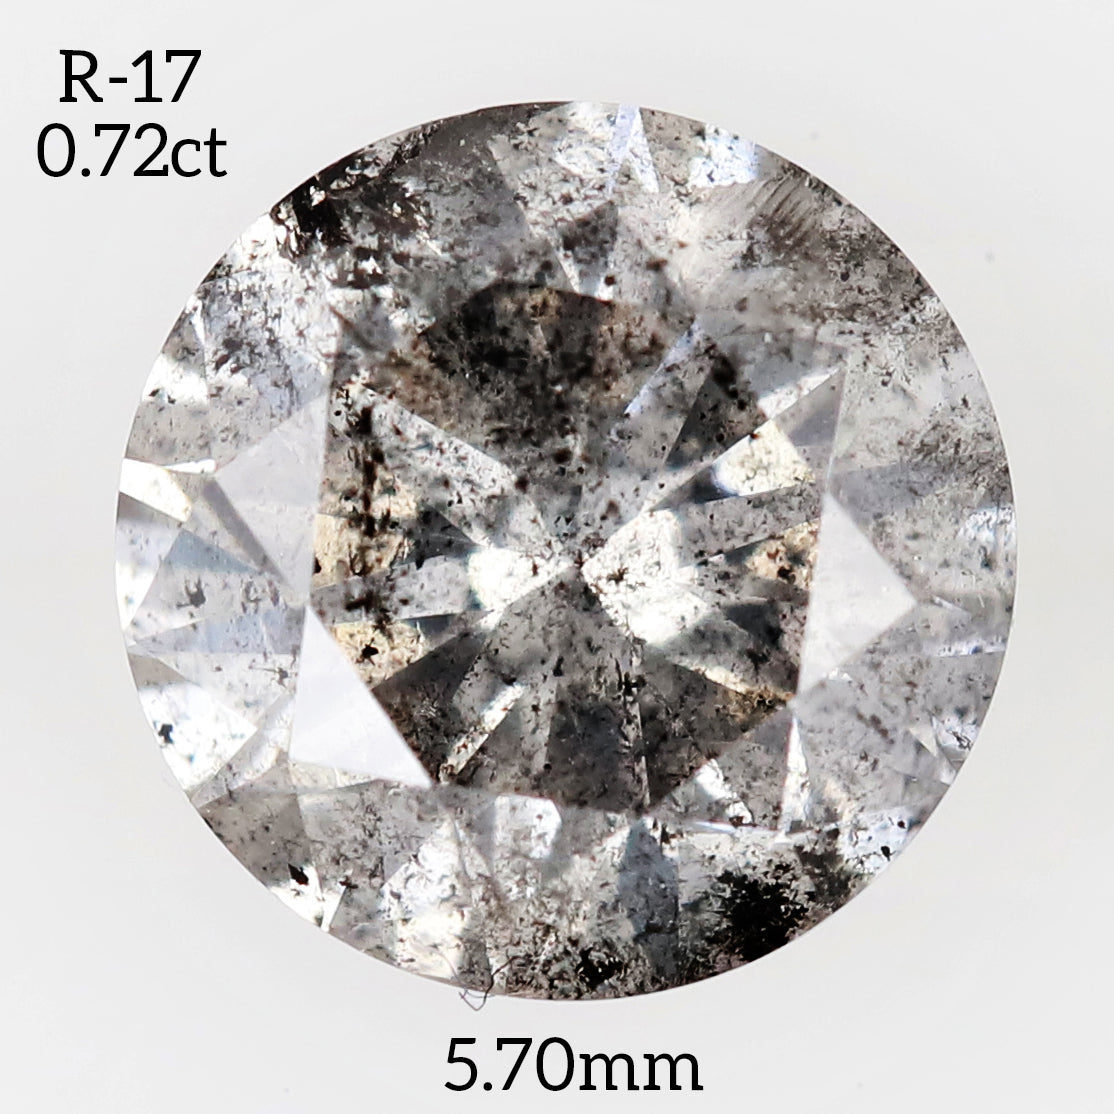 R17 - Salt and pepper round diamond